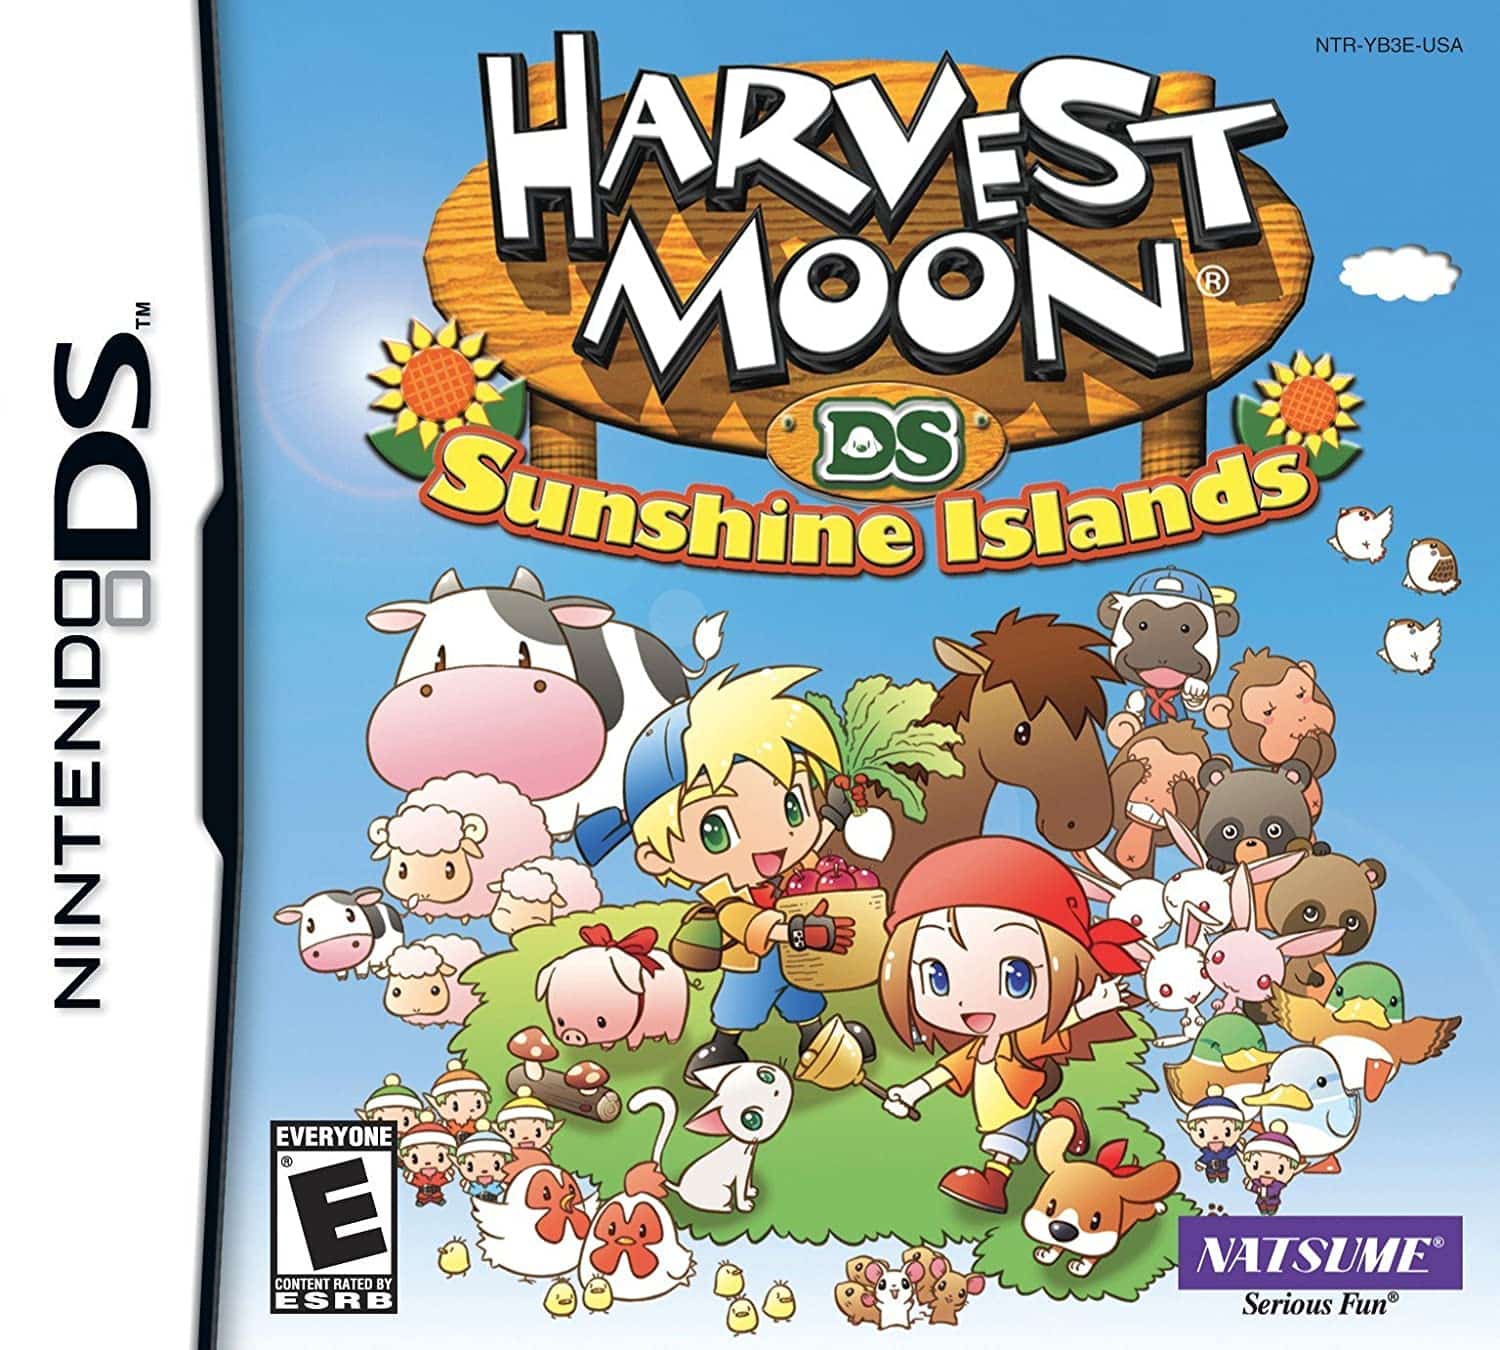 Harvest Moon DS: Sunshine Islands player count stats